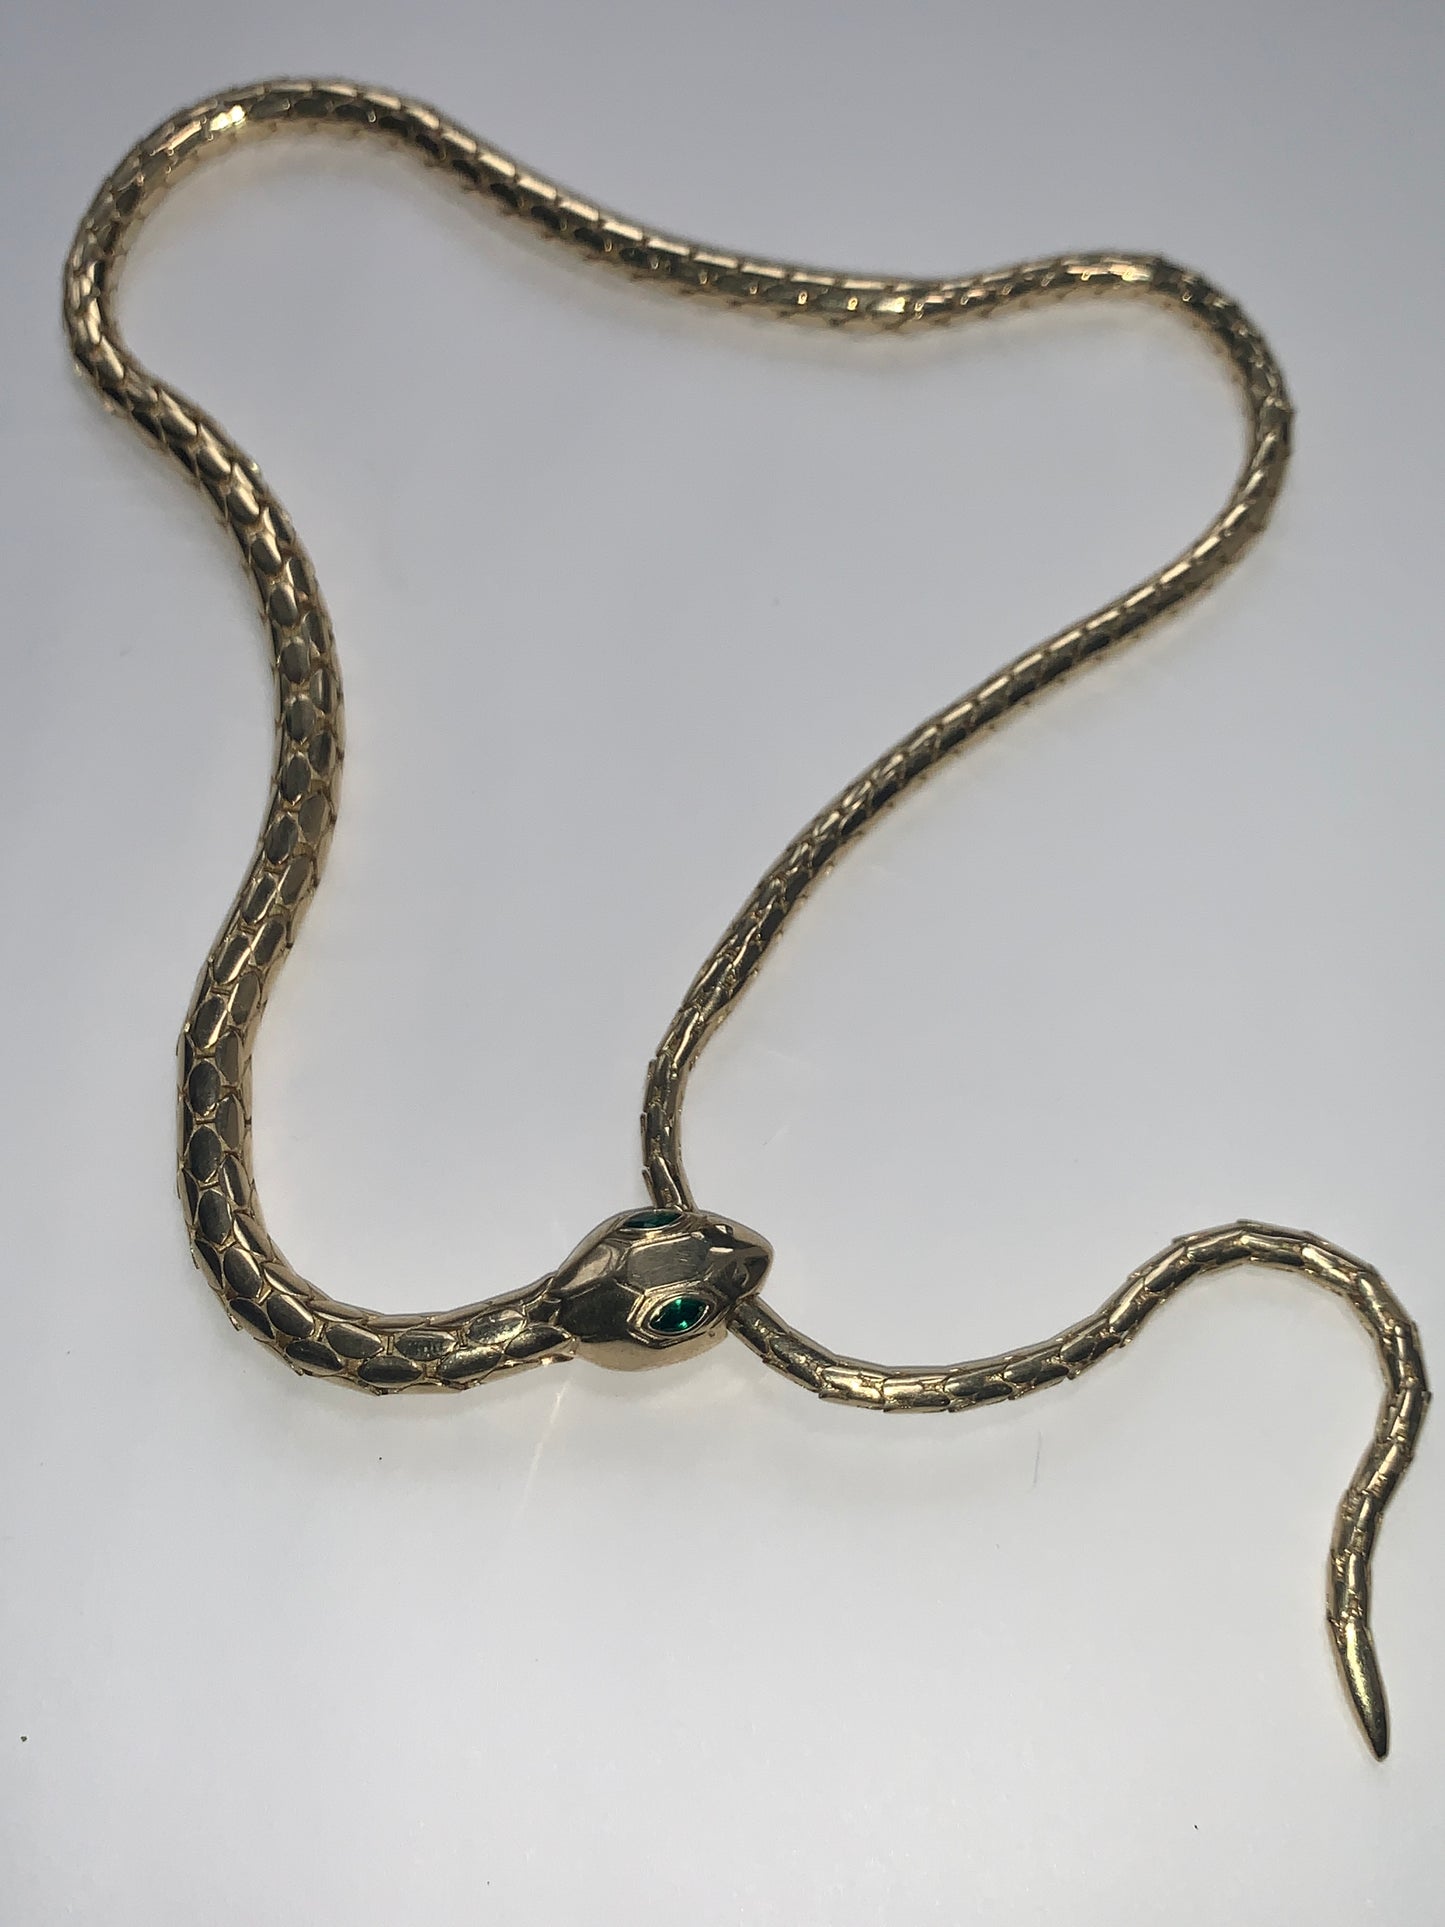 New Golden Snake Necklace / Choker